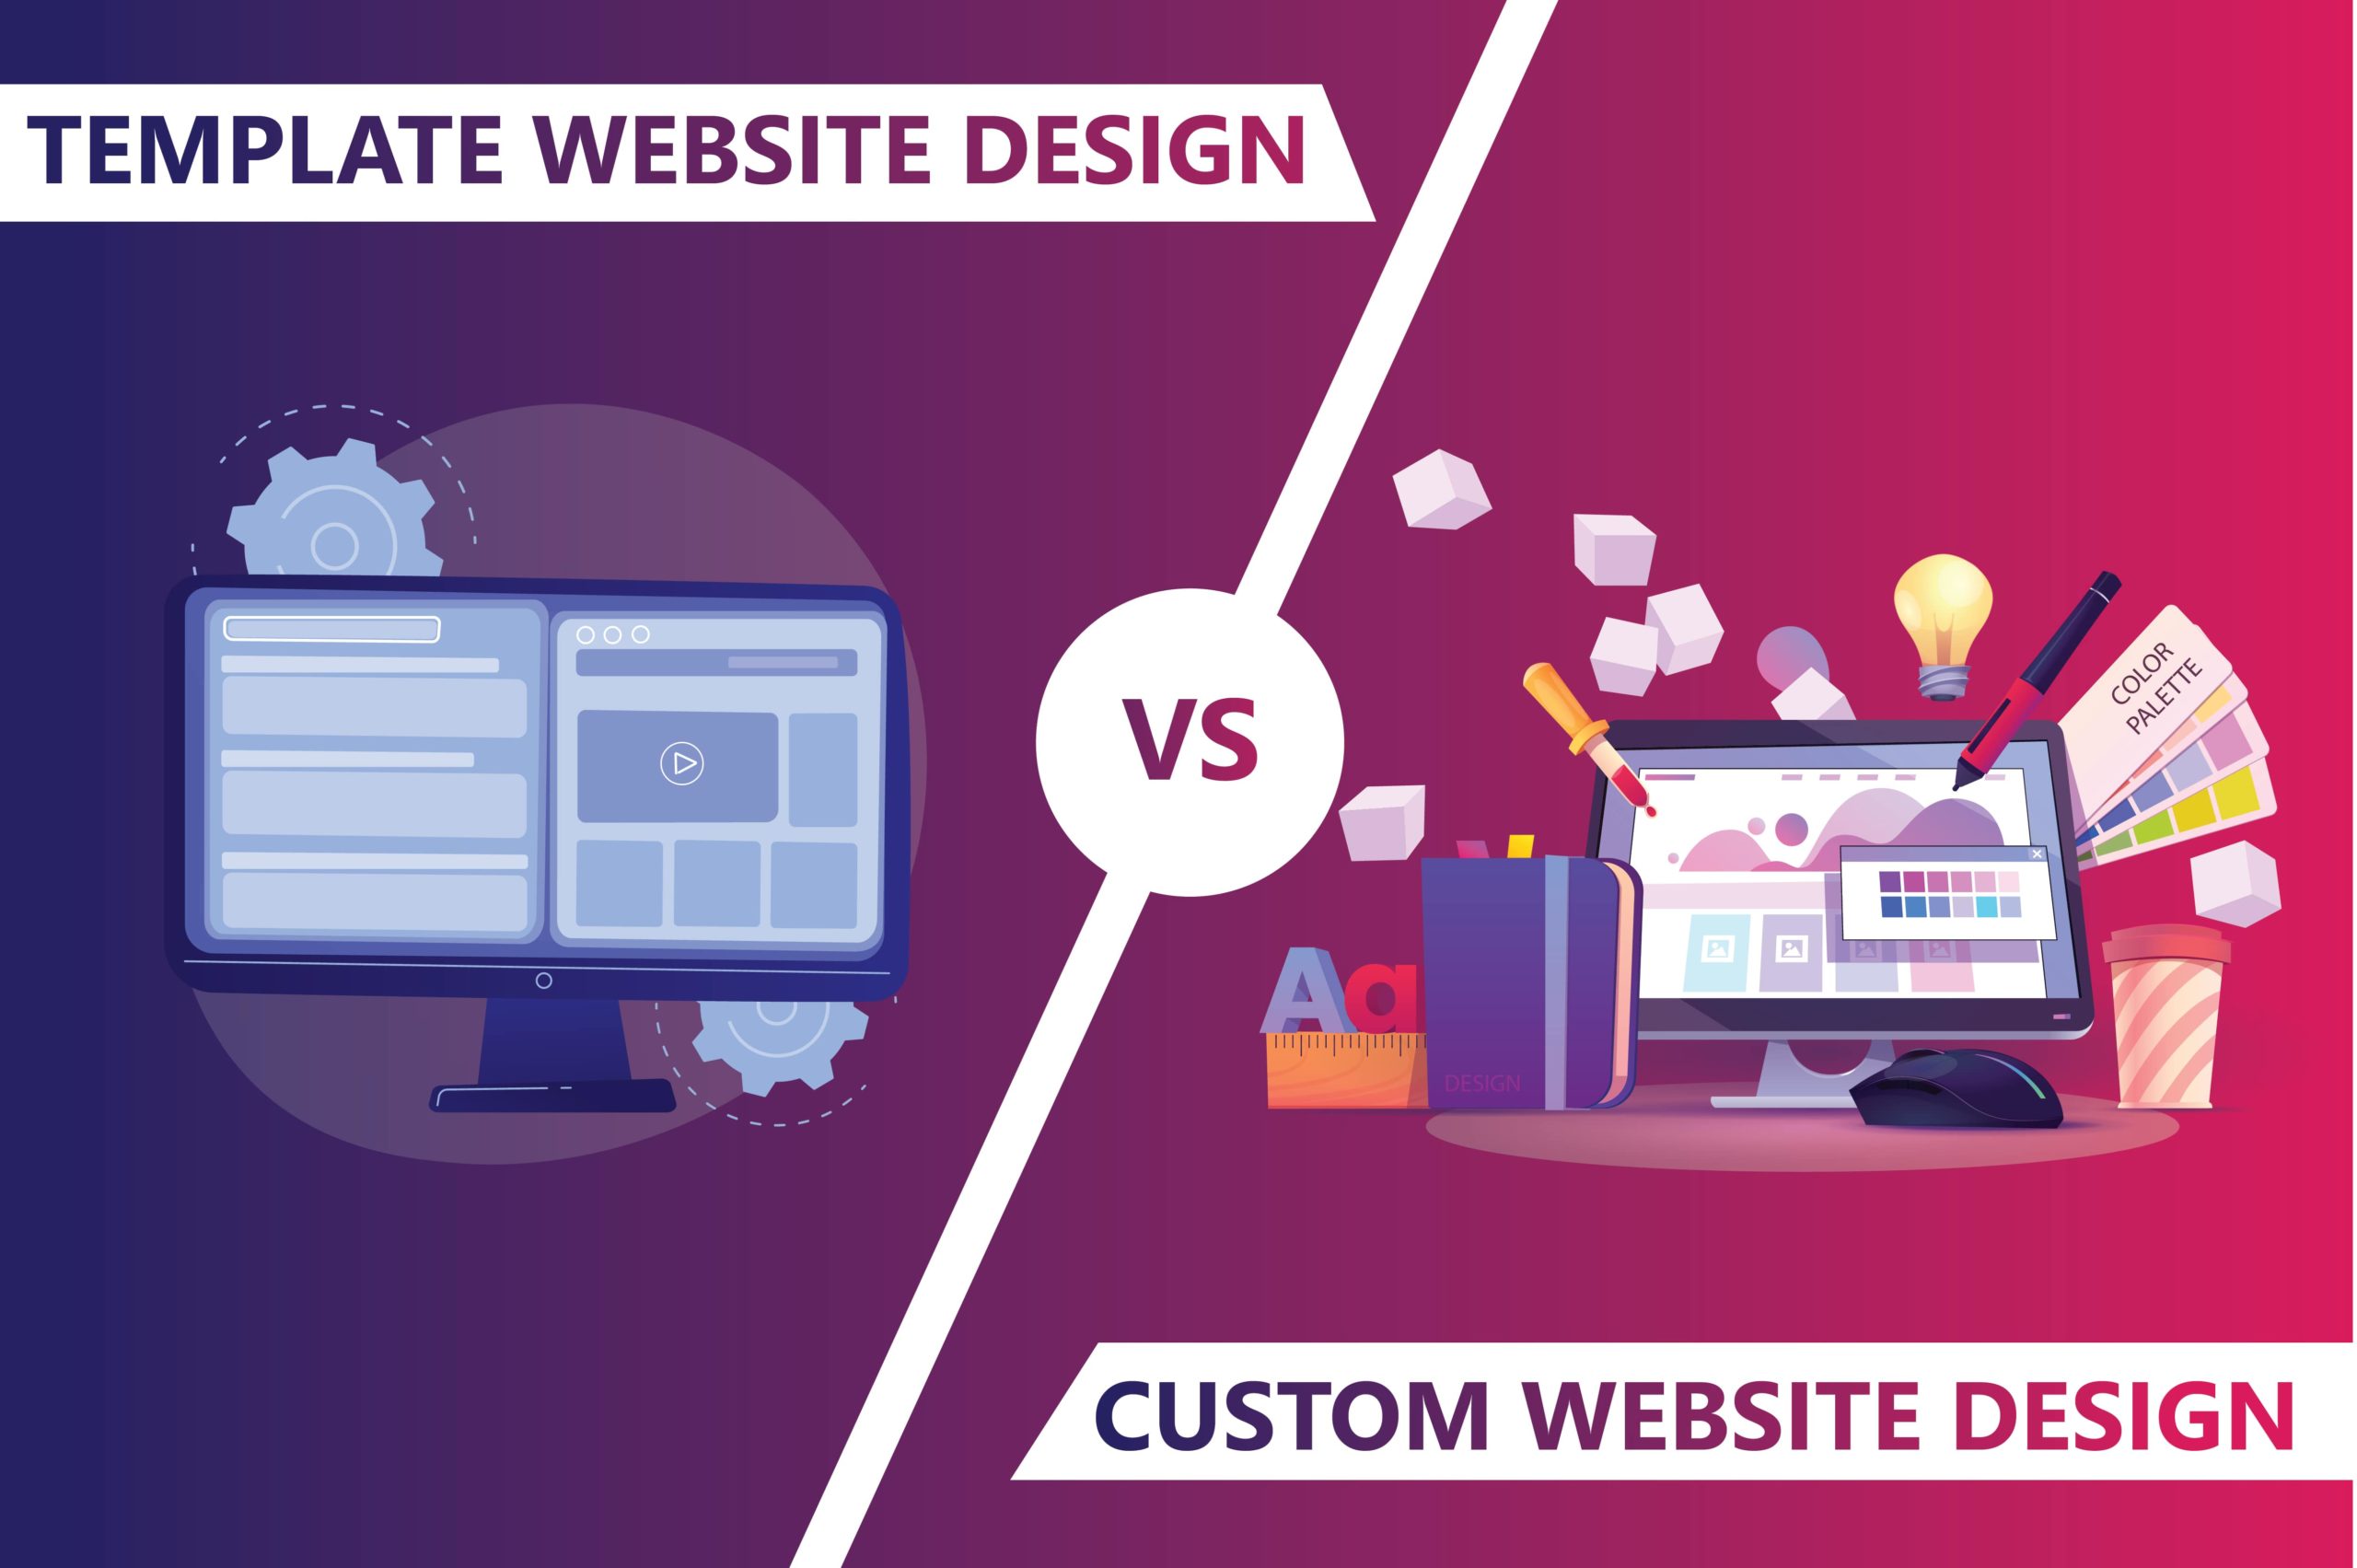 Template VS Custom Website Design